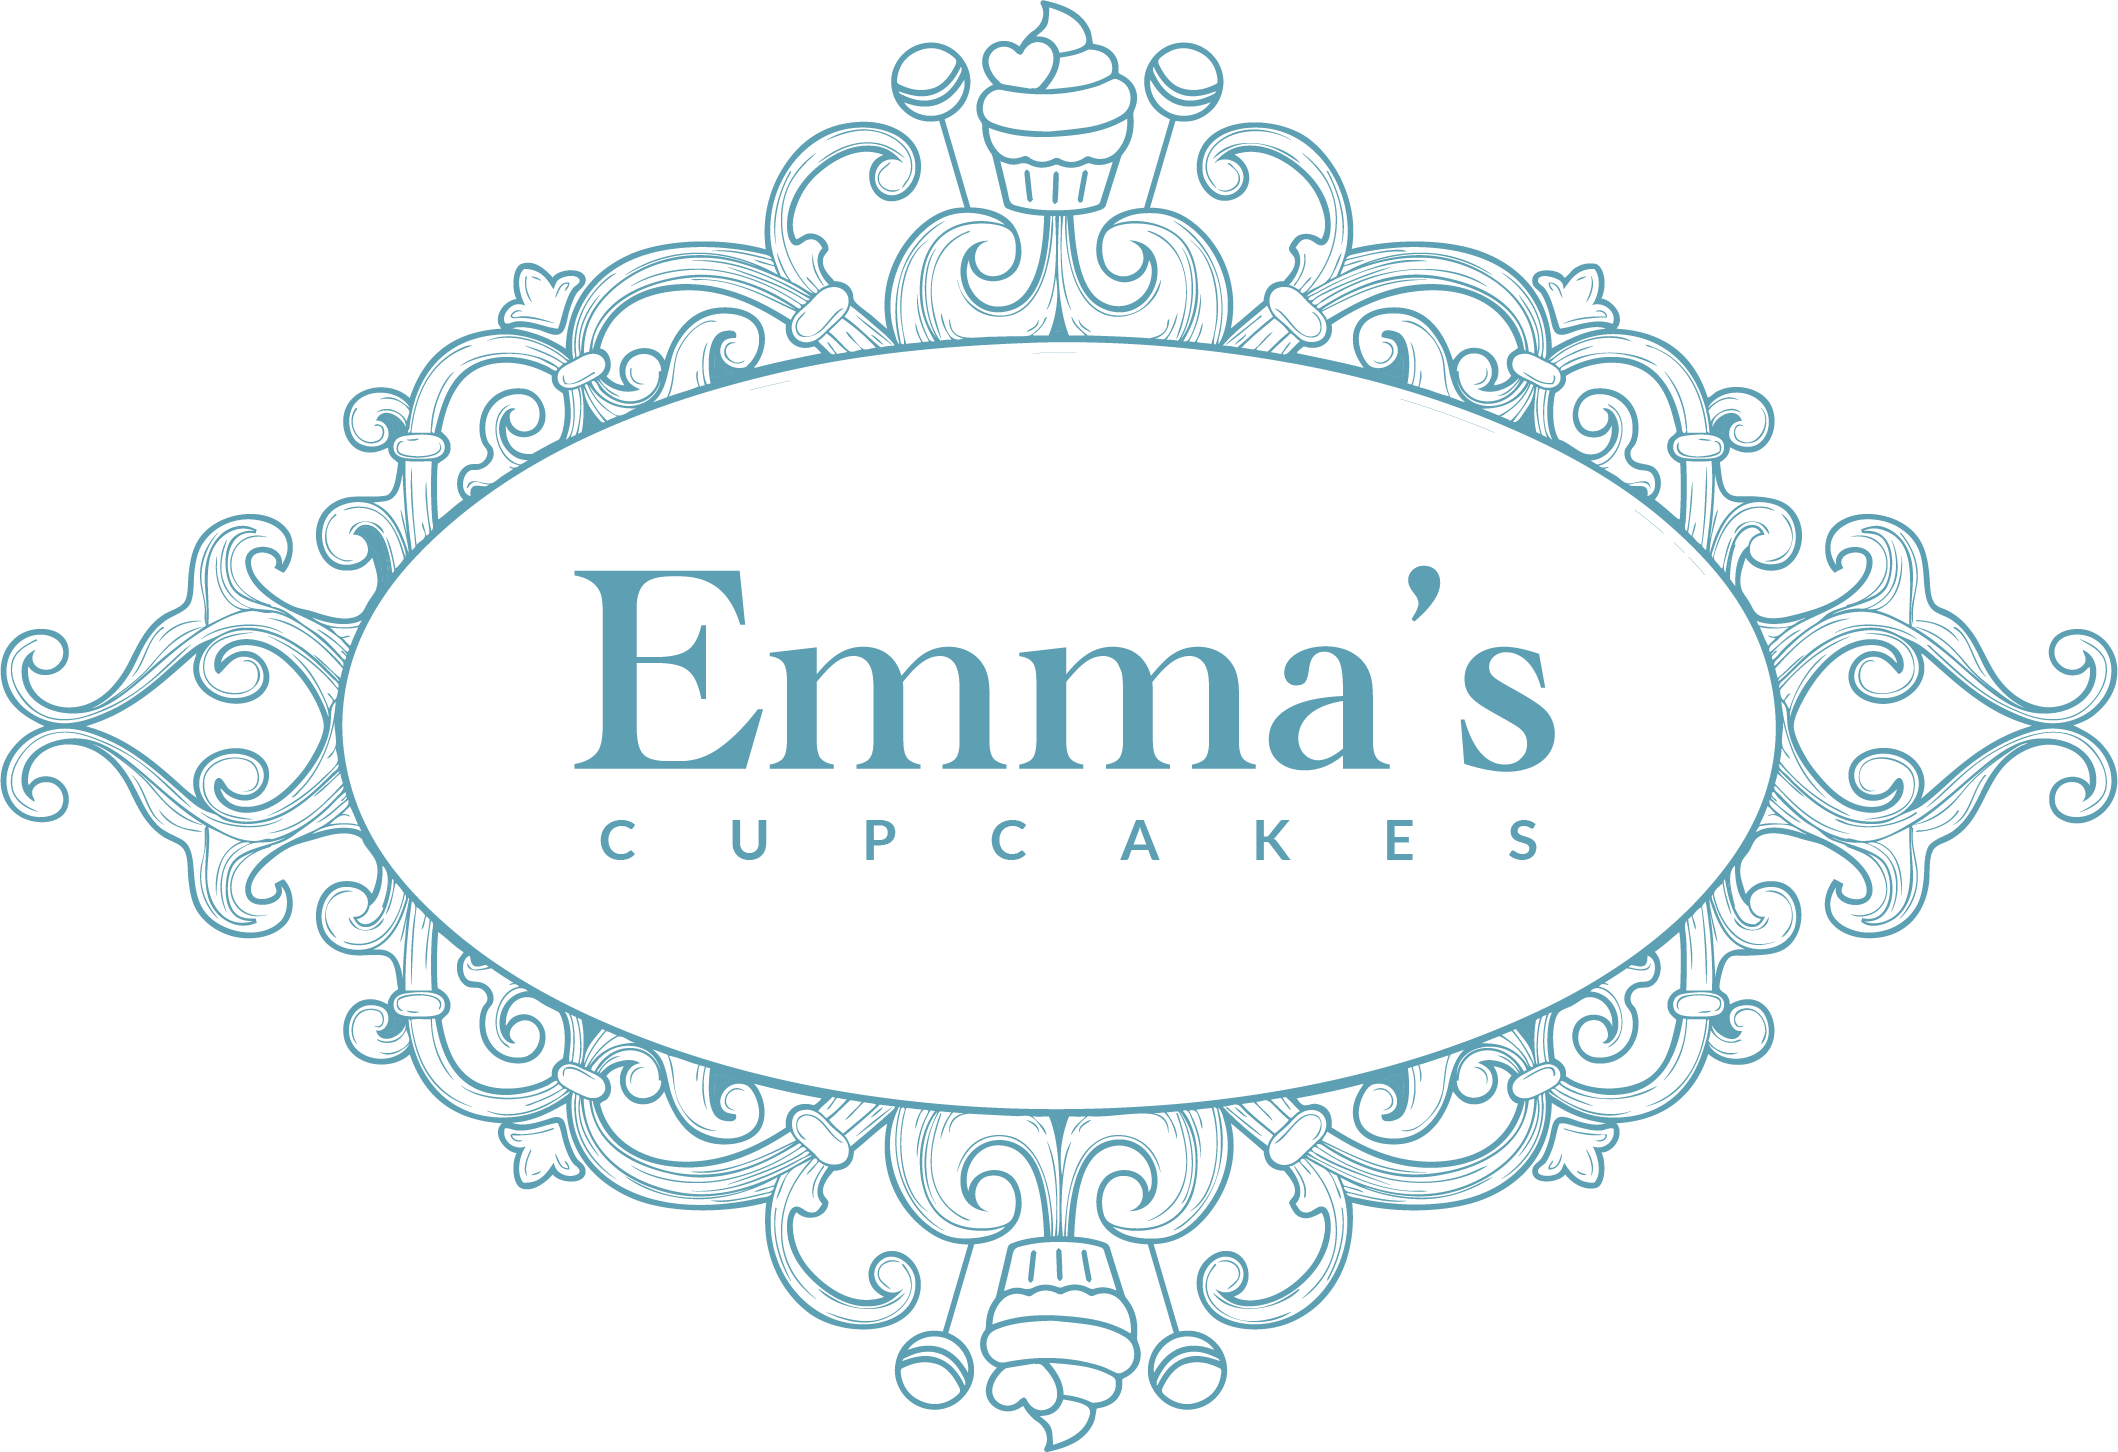 Emma's Cupcakes Nice popcakes cupcakes cakes logo-bleu